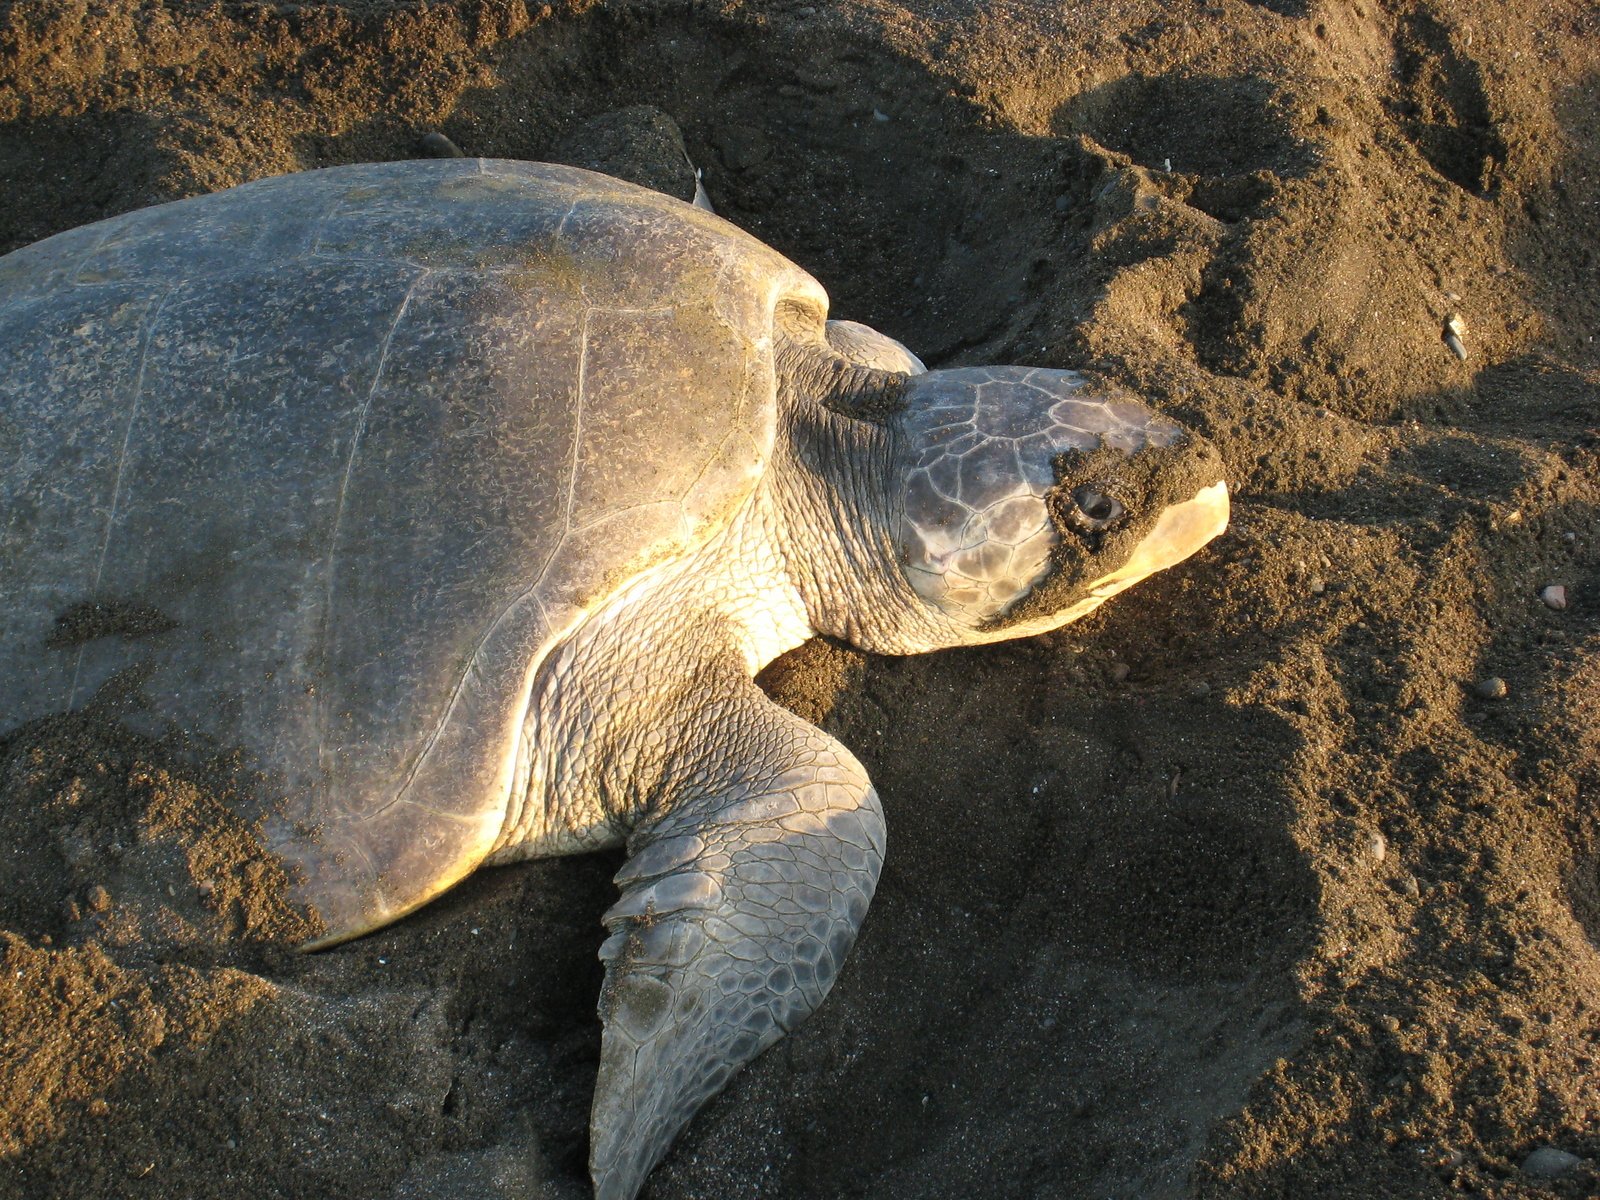 The peak of the turtle nesting season on the central Nicoya